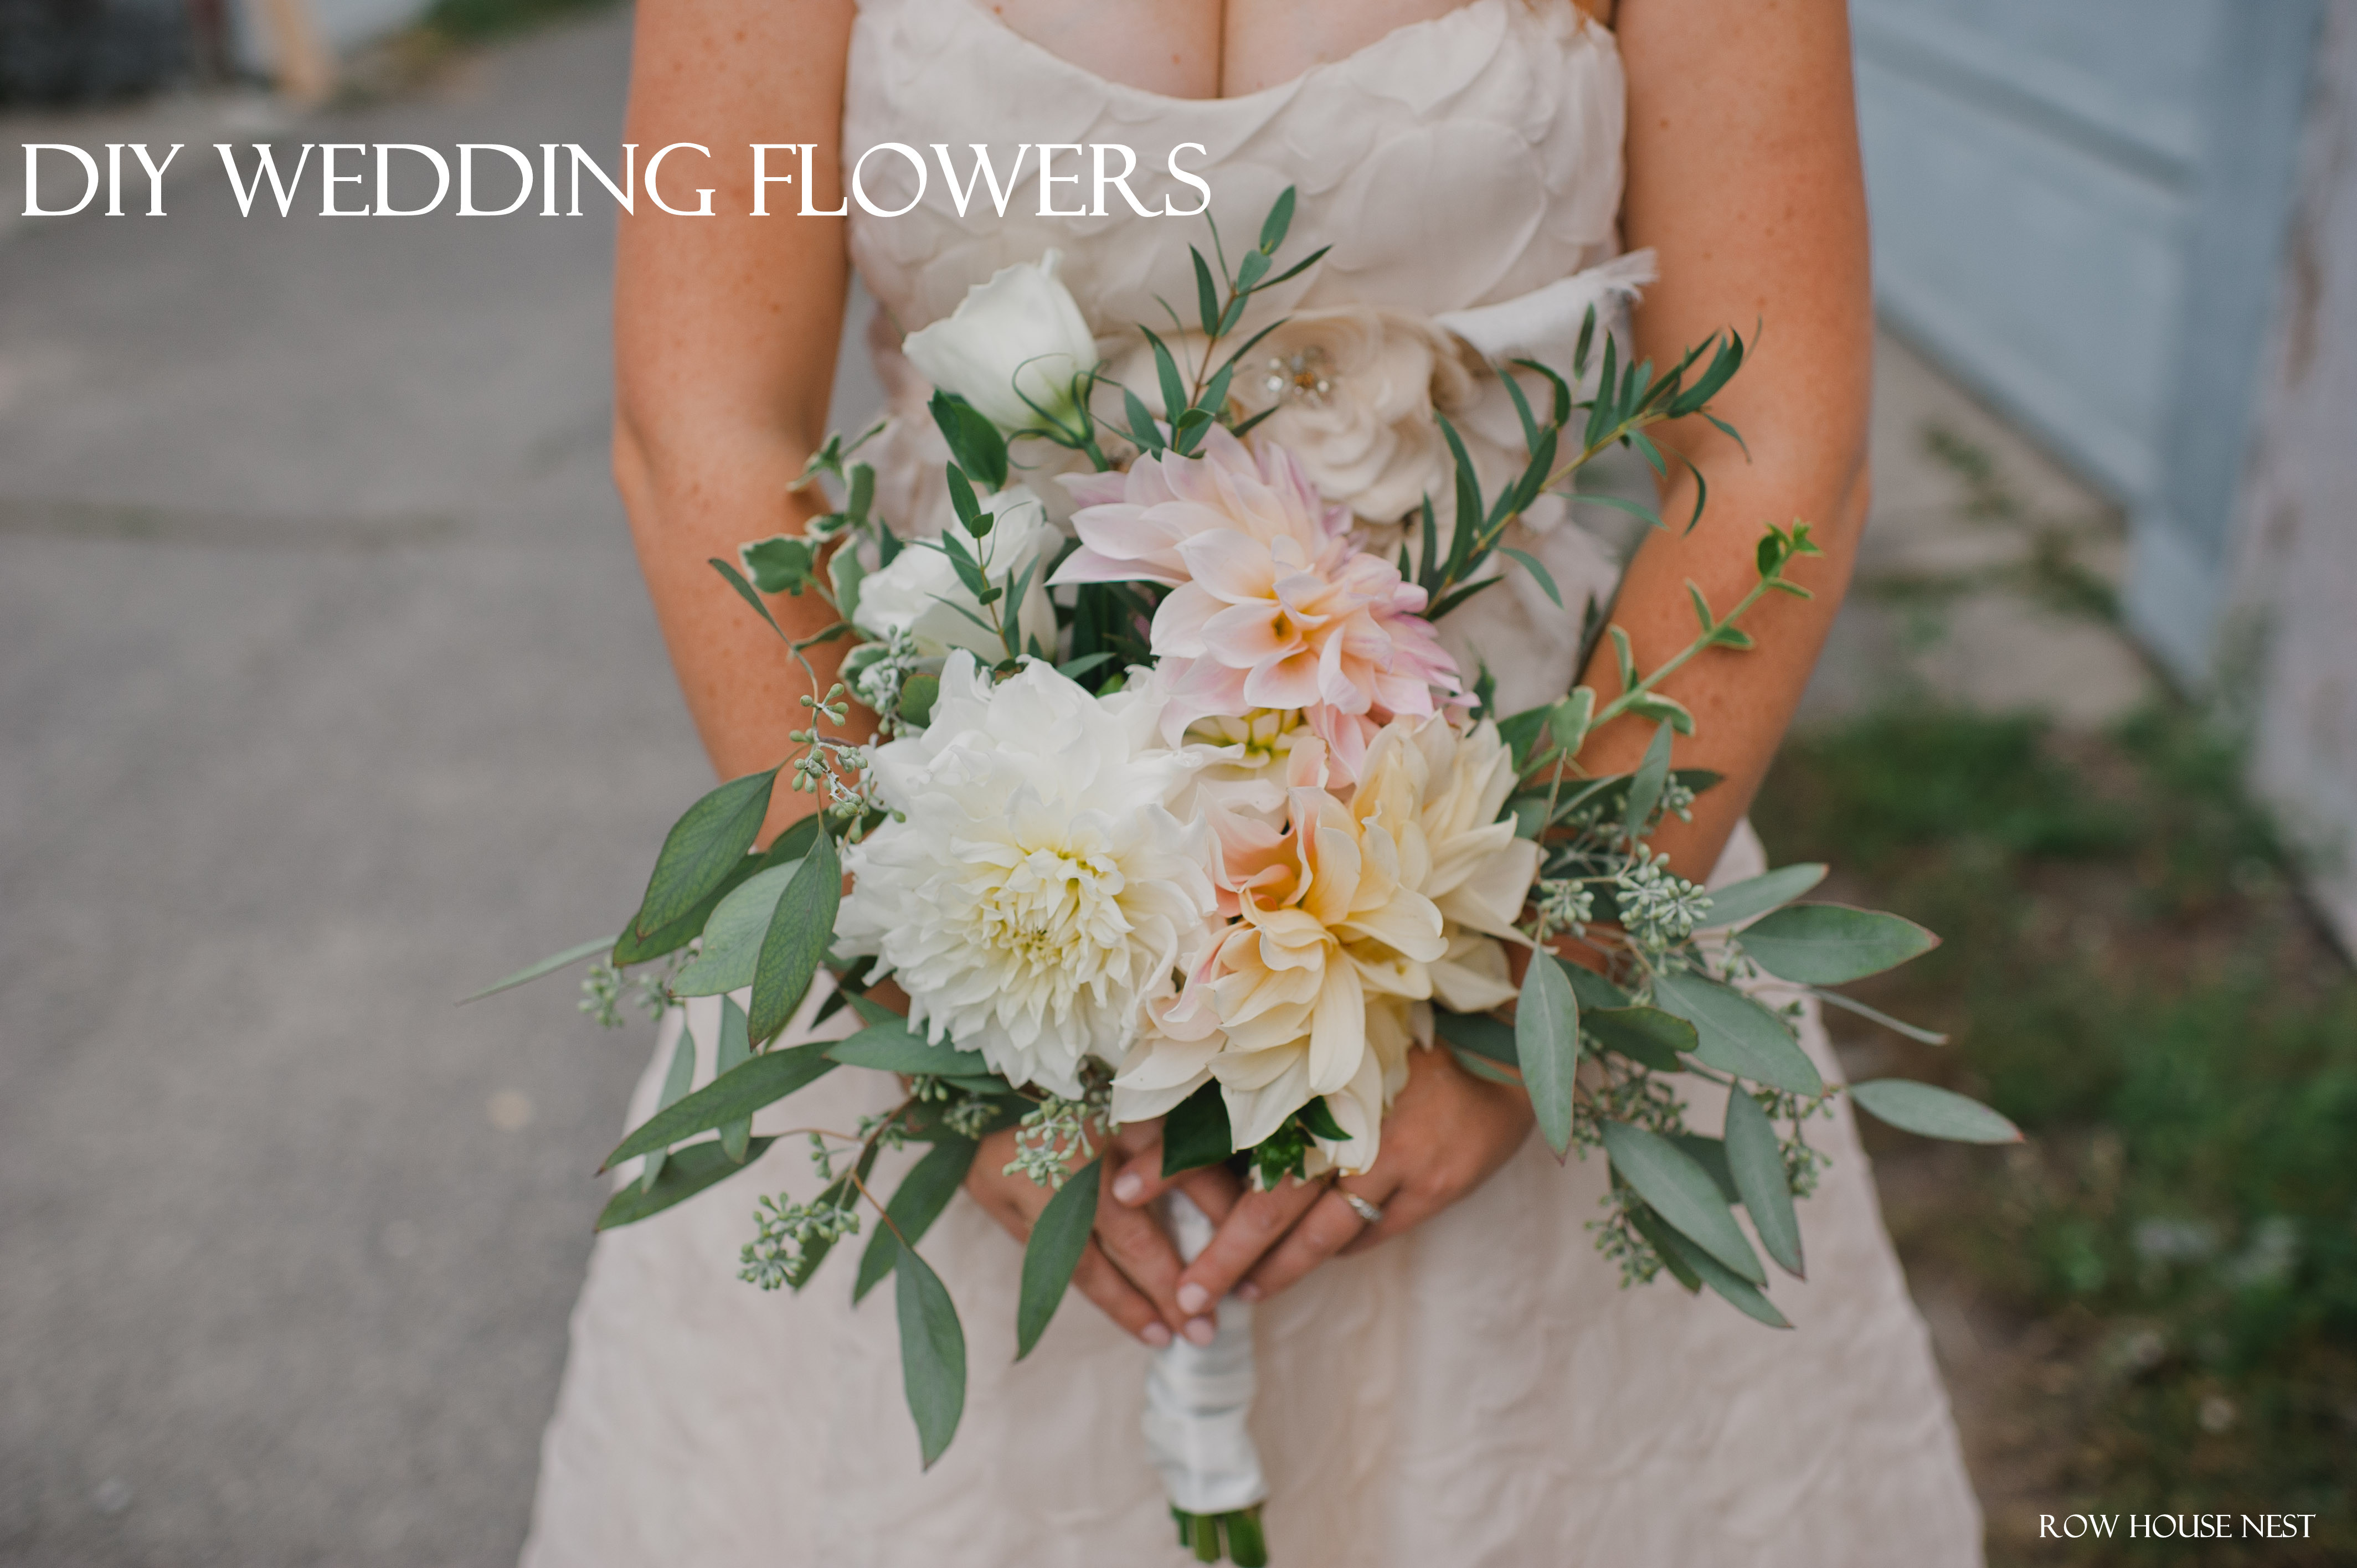 Best ideas about DIY Flower Wedding
. Save or Pin DIY Wedding Flowers Now.